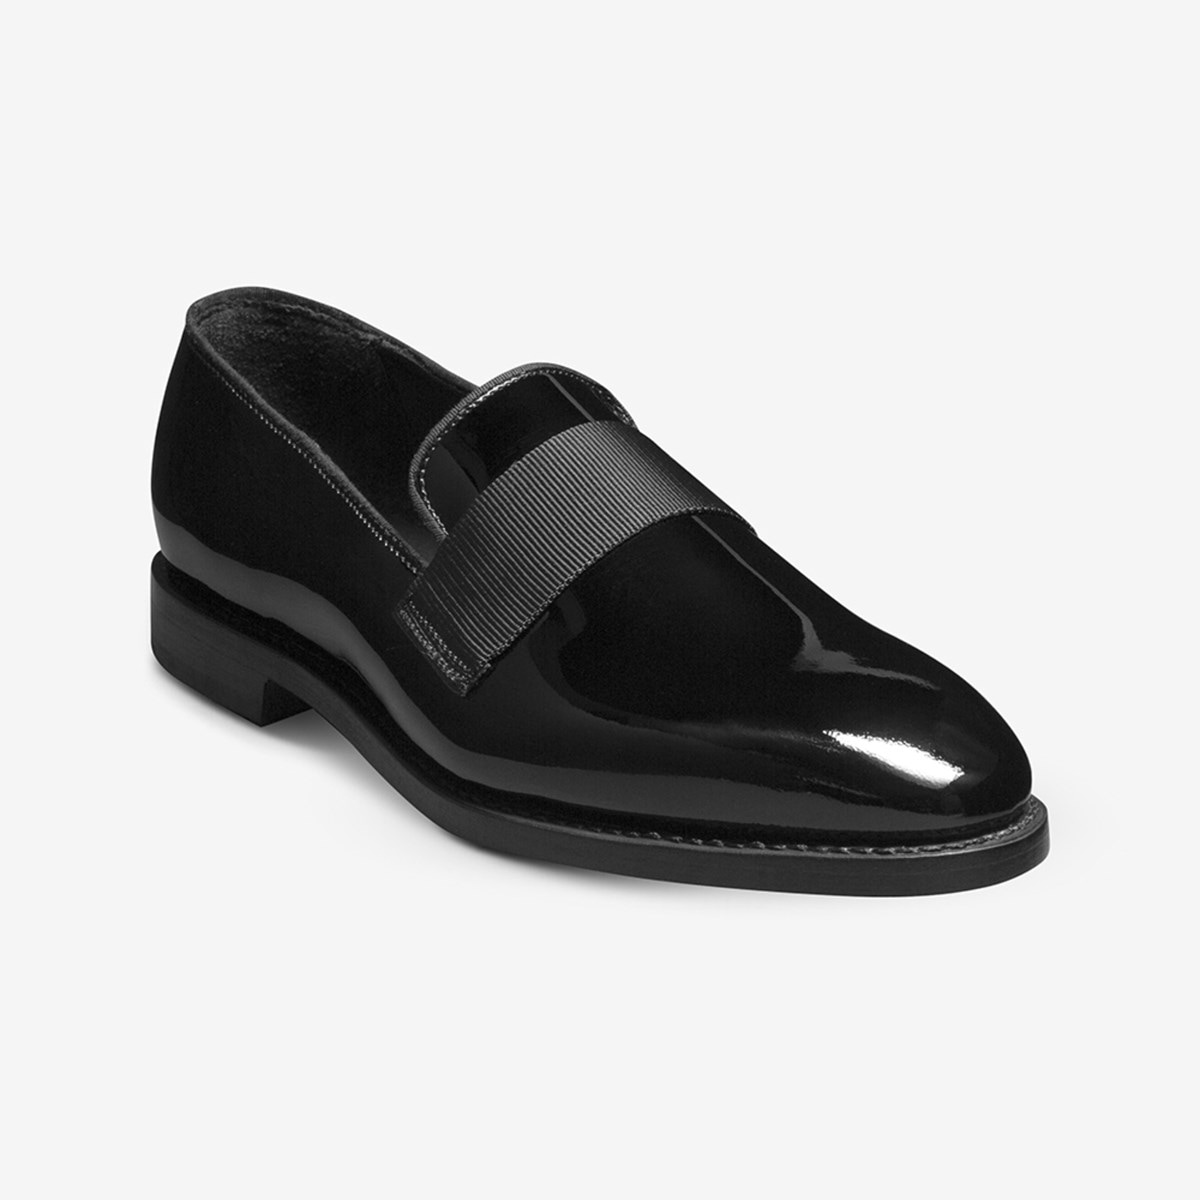 Allen Edmonds Men's James Dress Loafer in Black Patent, Size 8.5 D